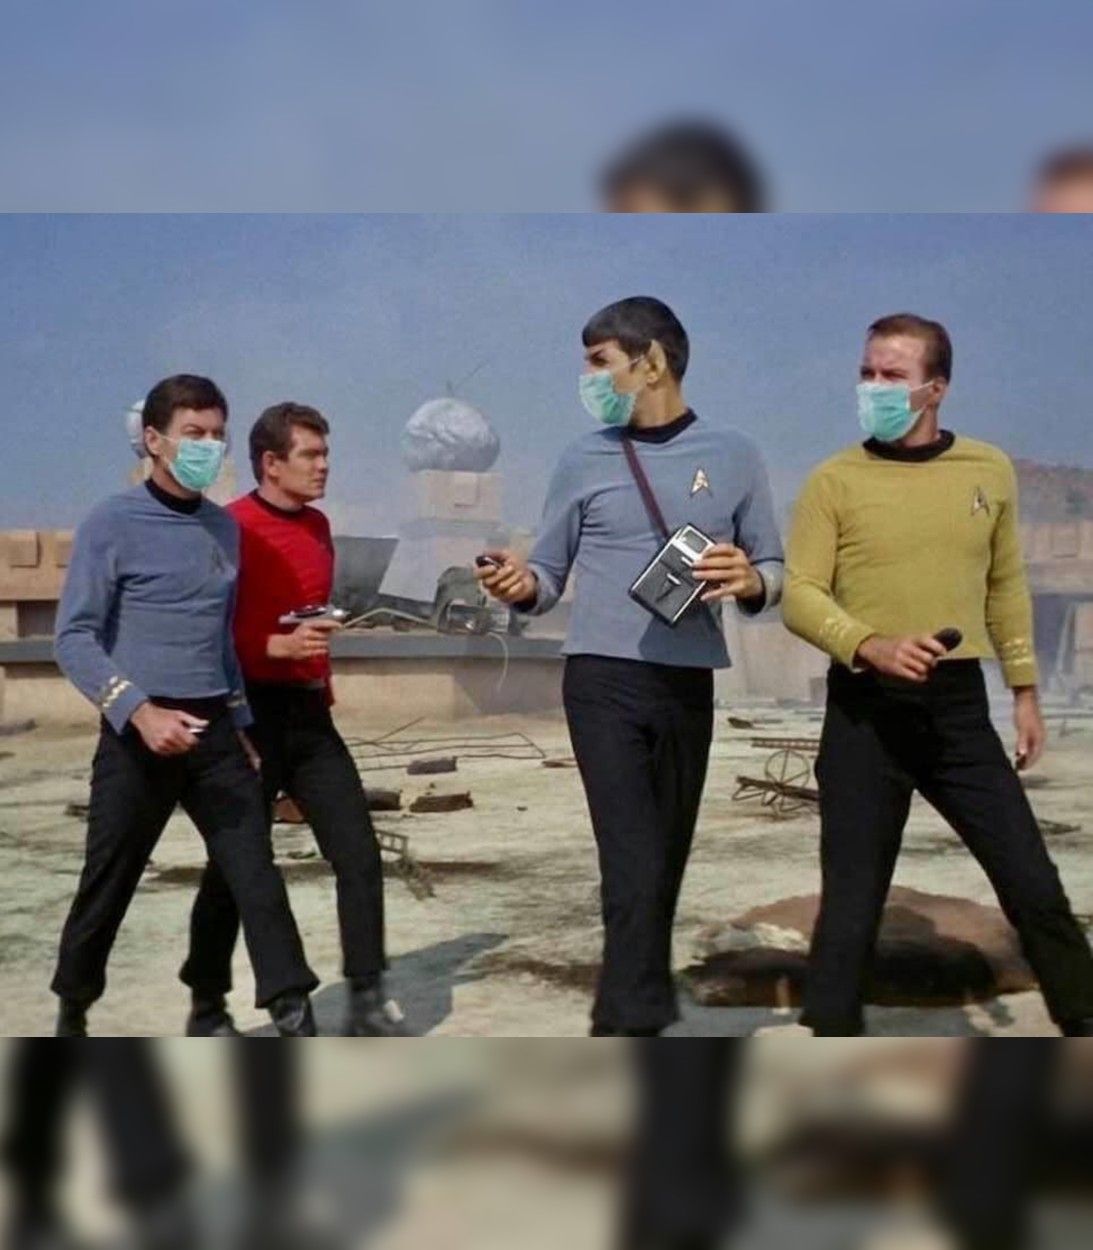 Star Trek red shirt masks meme vertical